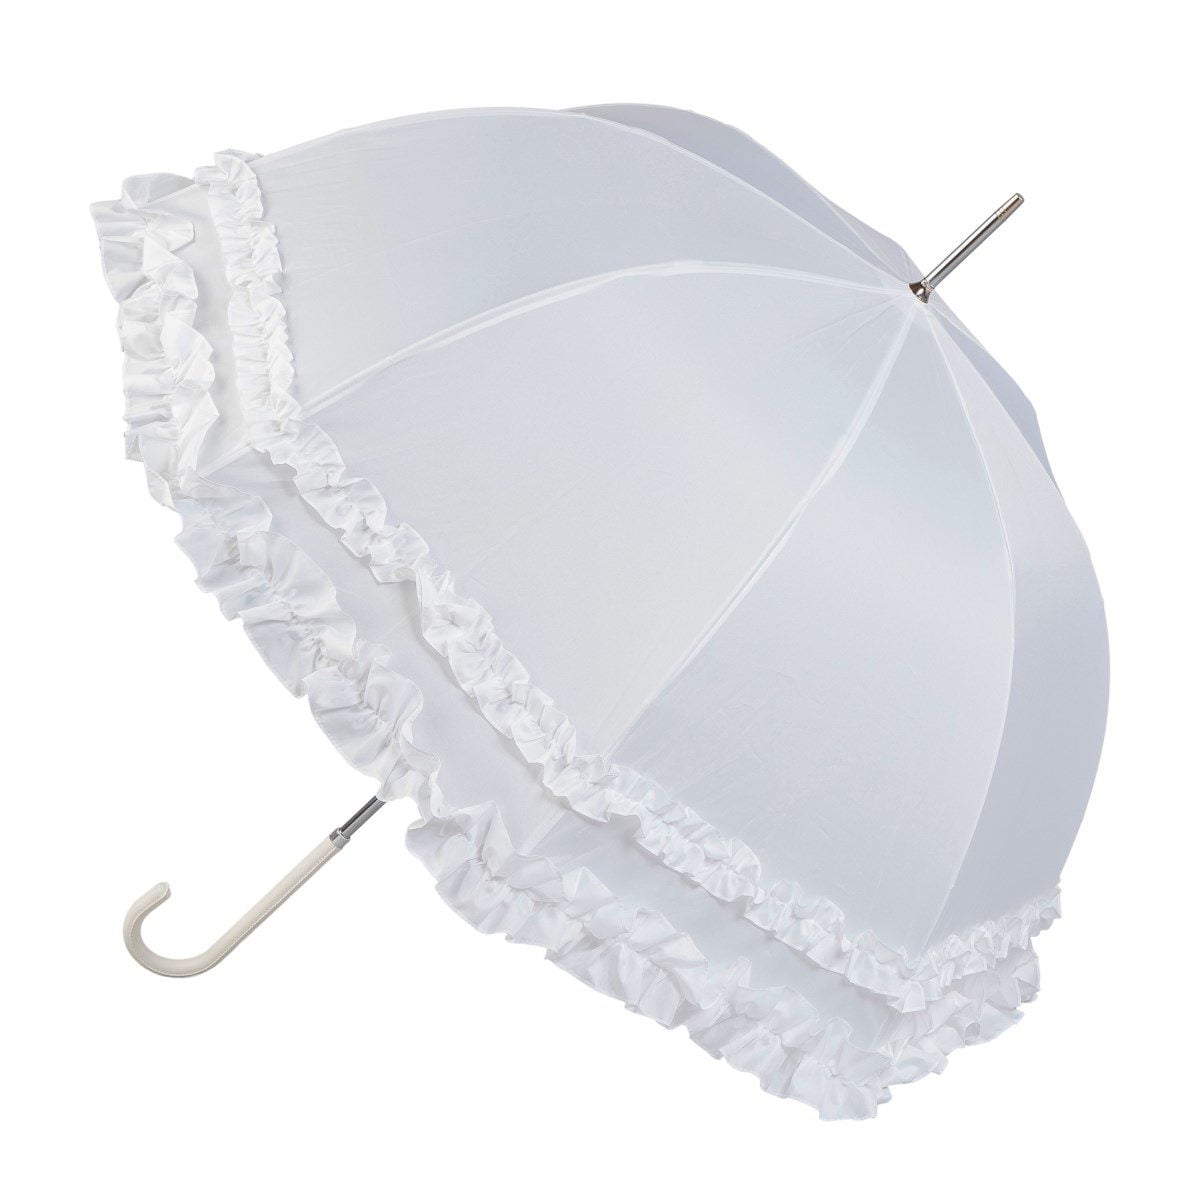 Double Frilled White Umbrella Open Angled